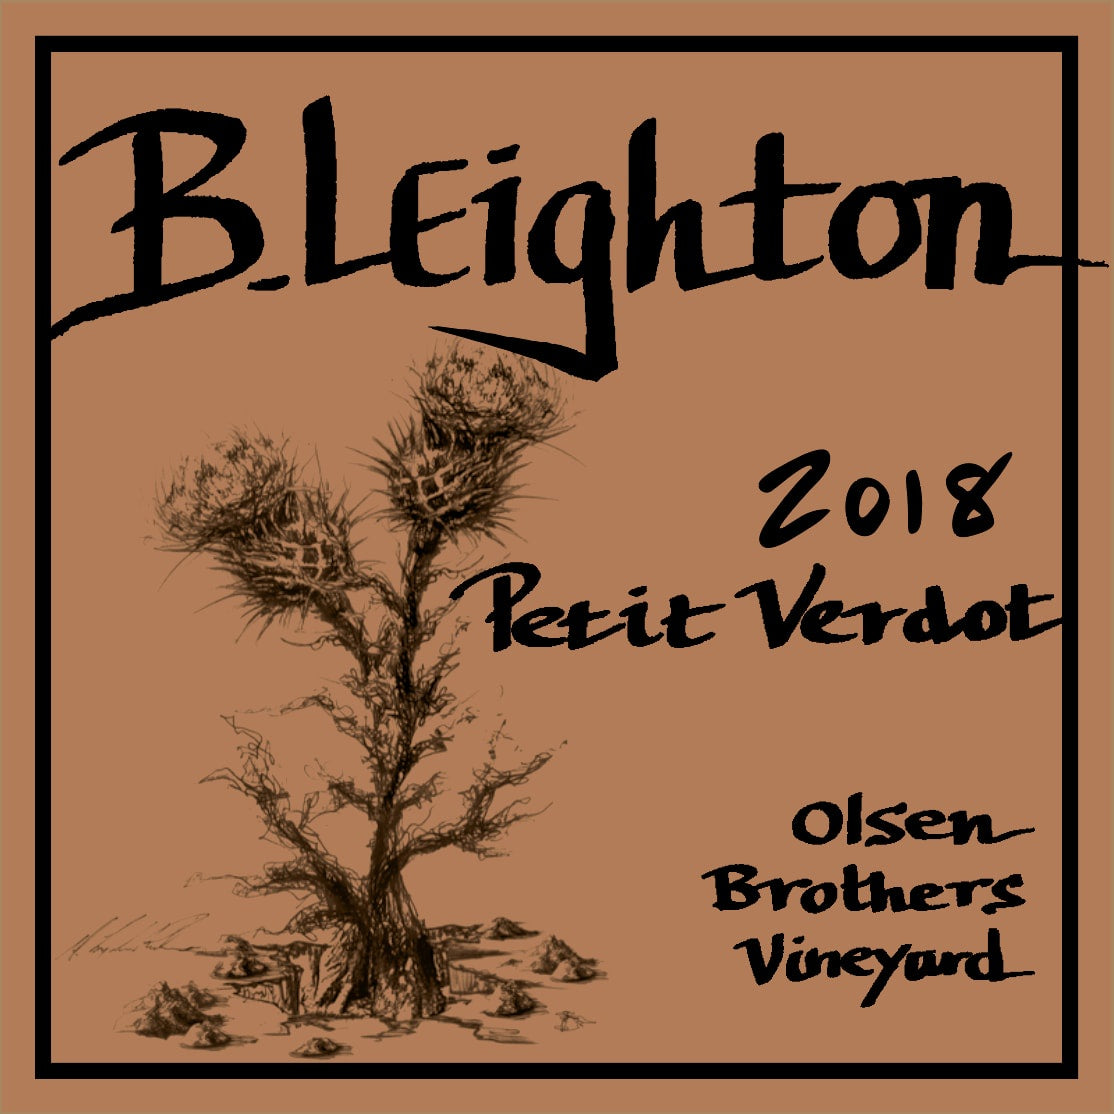 B. Leighton 2018 Petit Verdot